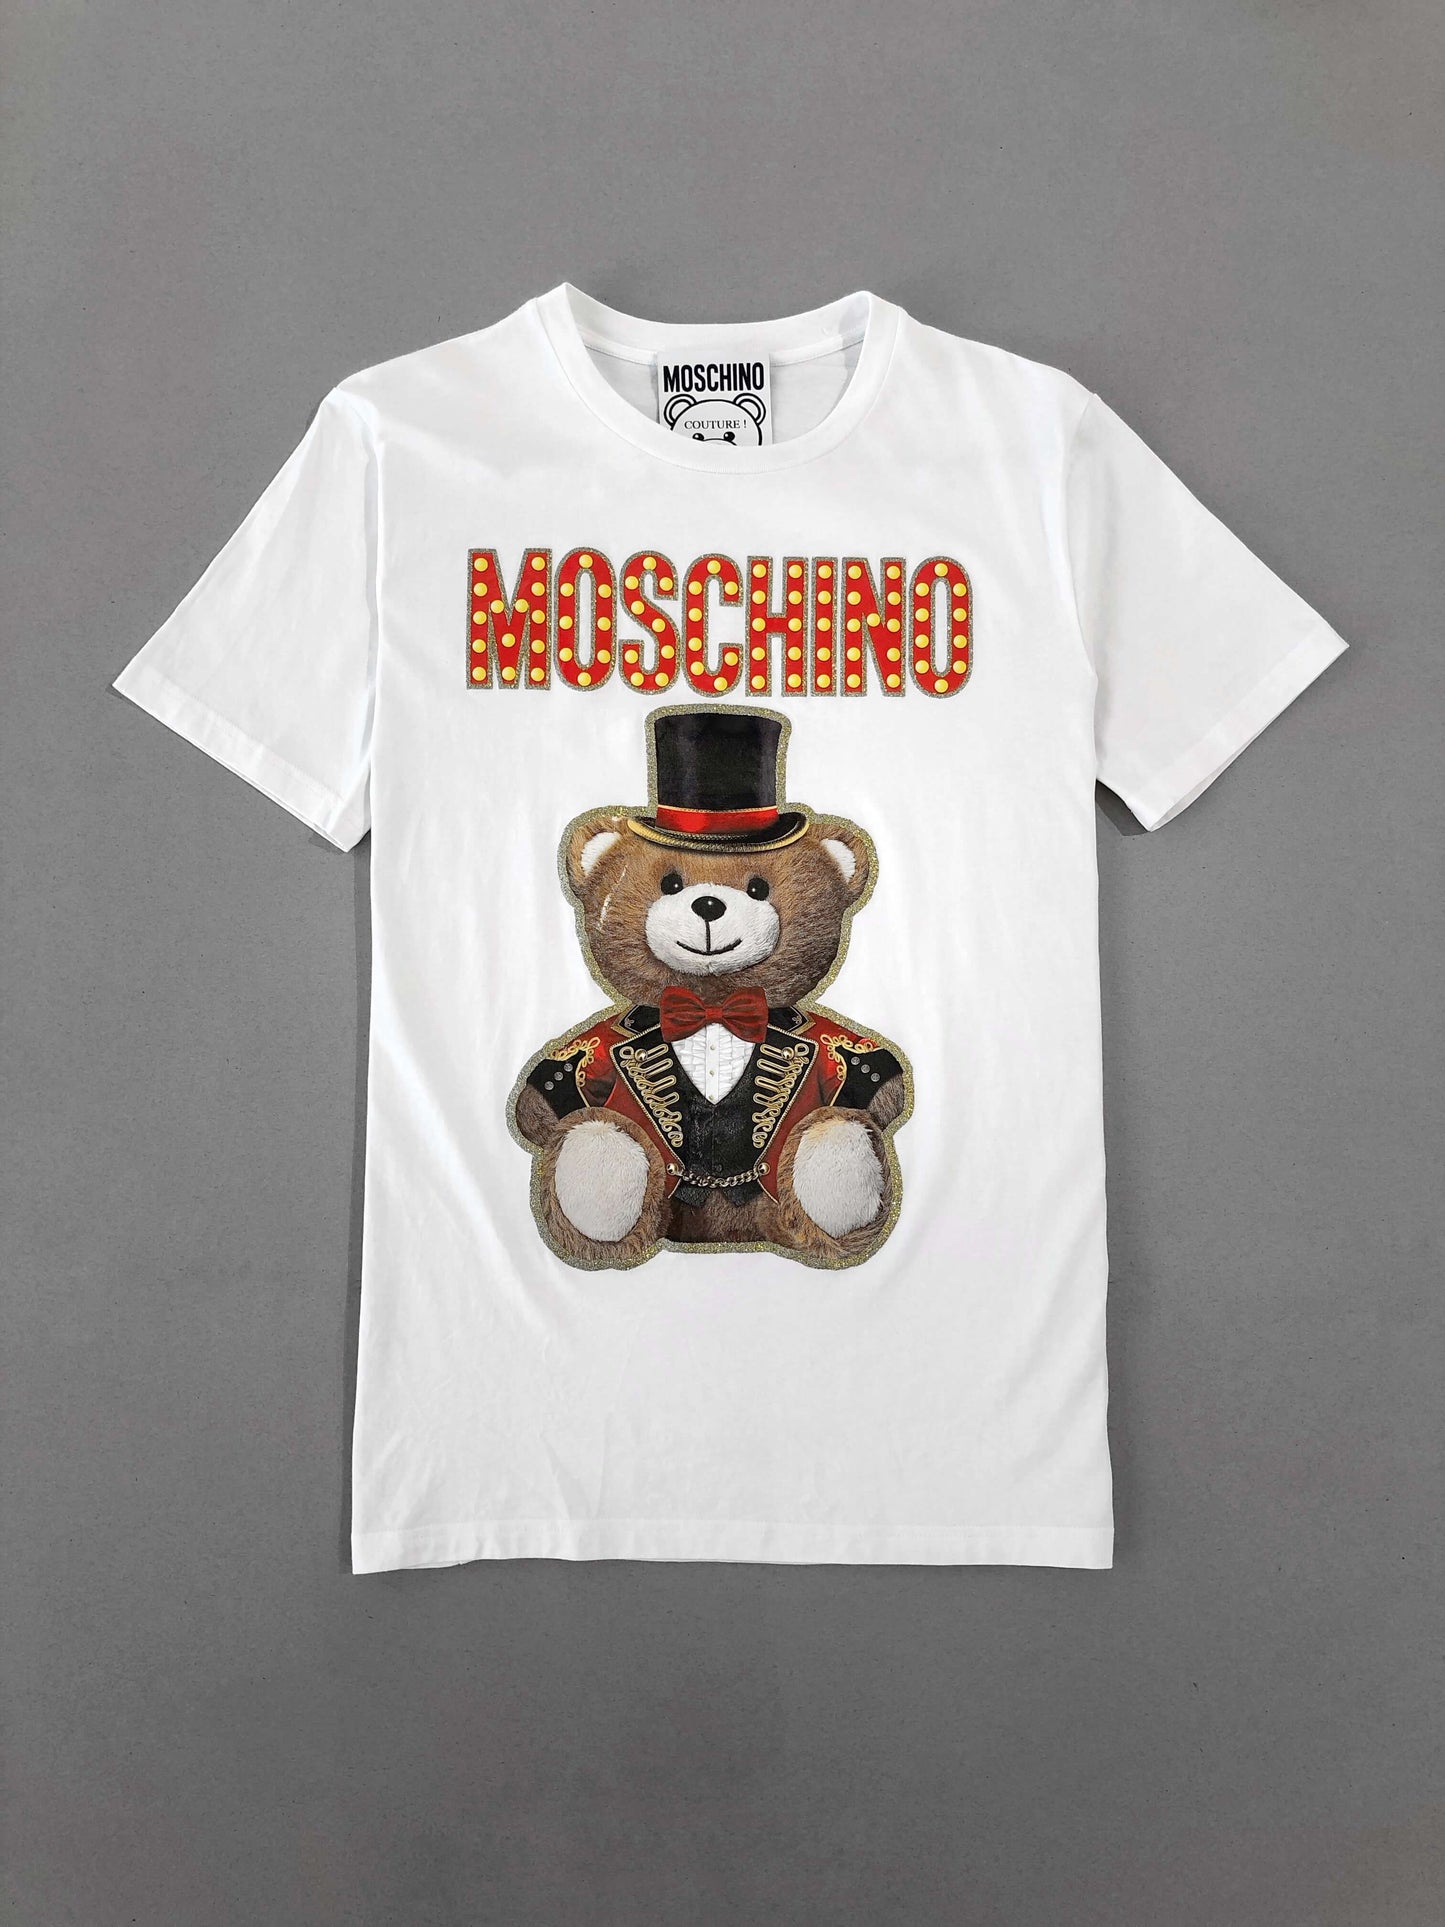 Moschino Teddy Printed White T-shirt